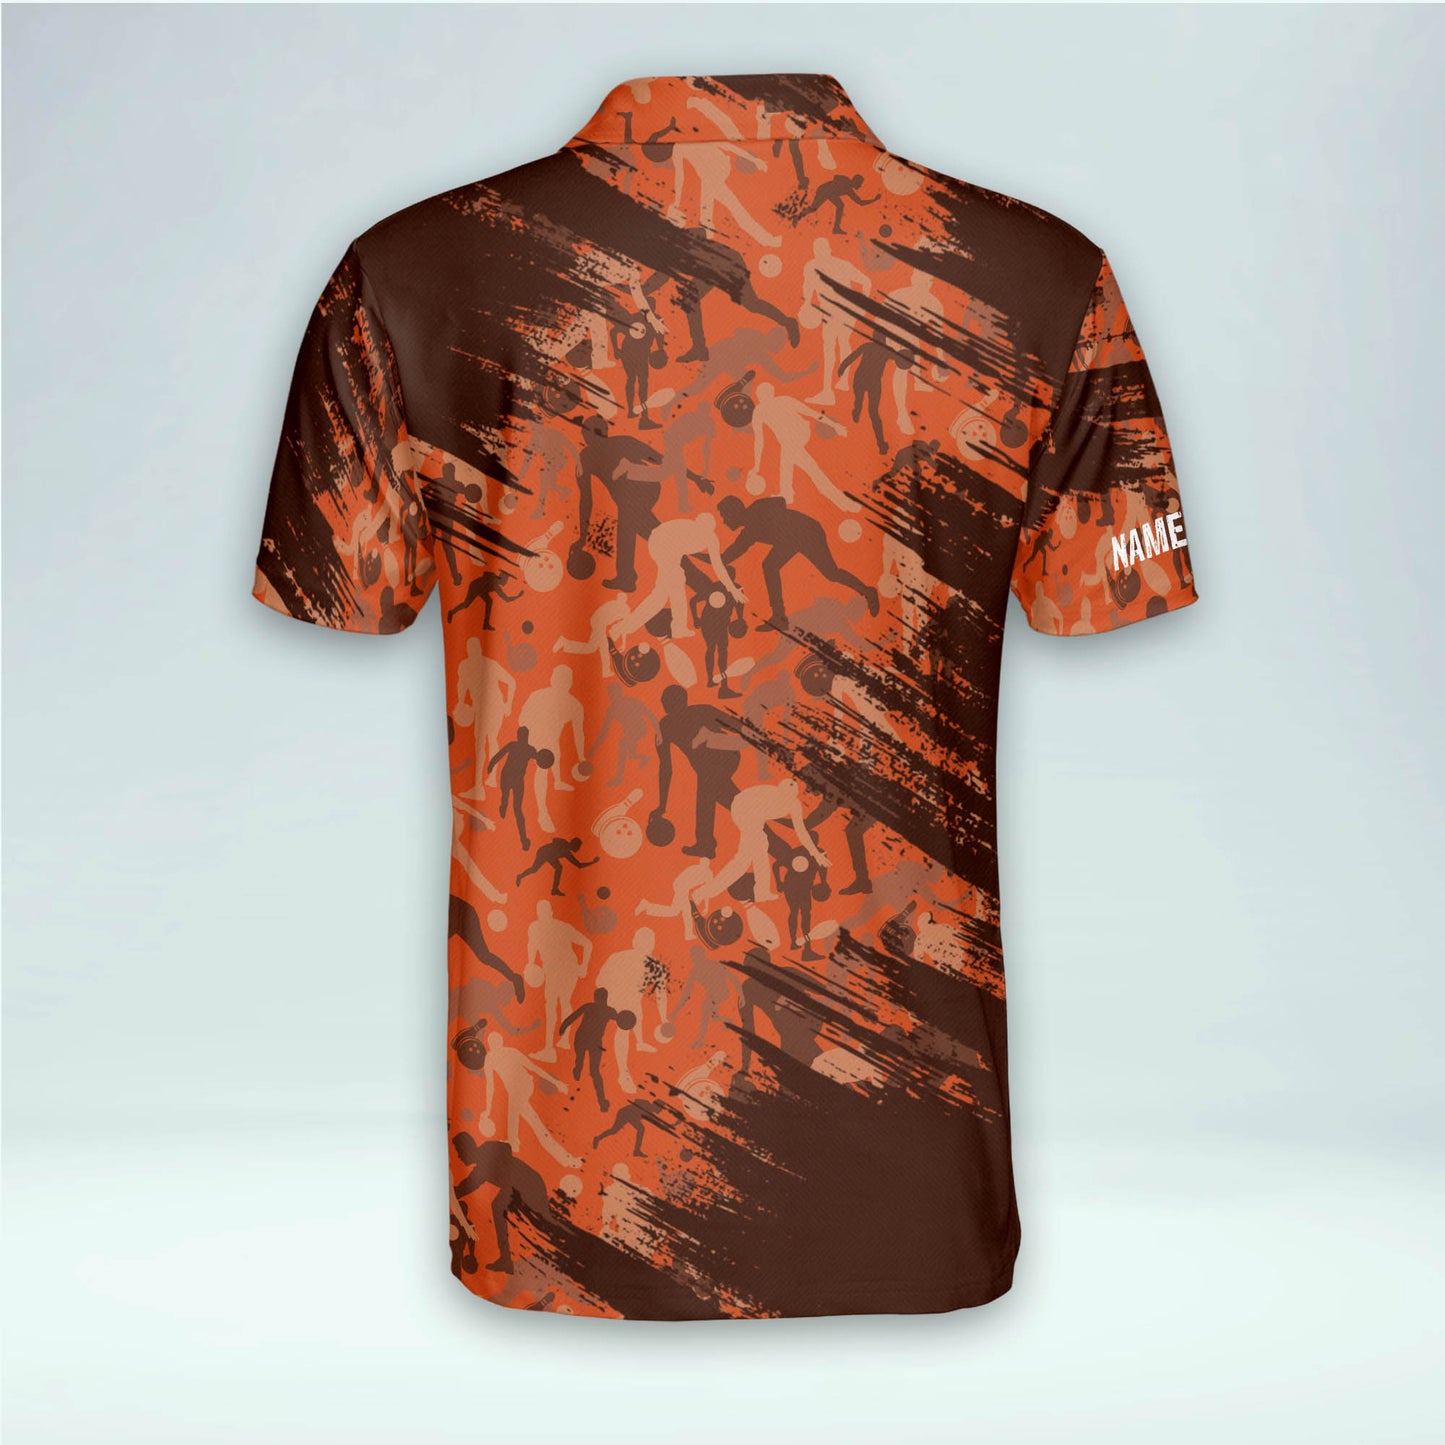 Custom Bowling Shirts For Men - Skull Short Sleeve Designer Bowling Shirt - Men's Custom Bowling Shirts With Name - Men's Orange Bowling Polo Shirts BM0125